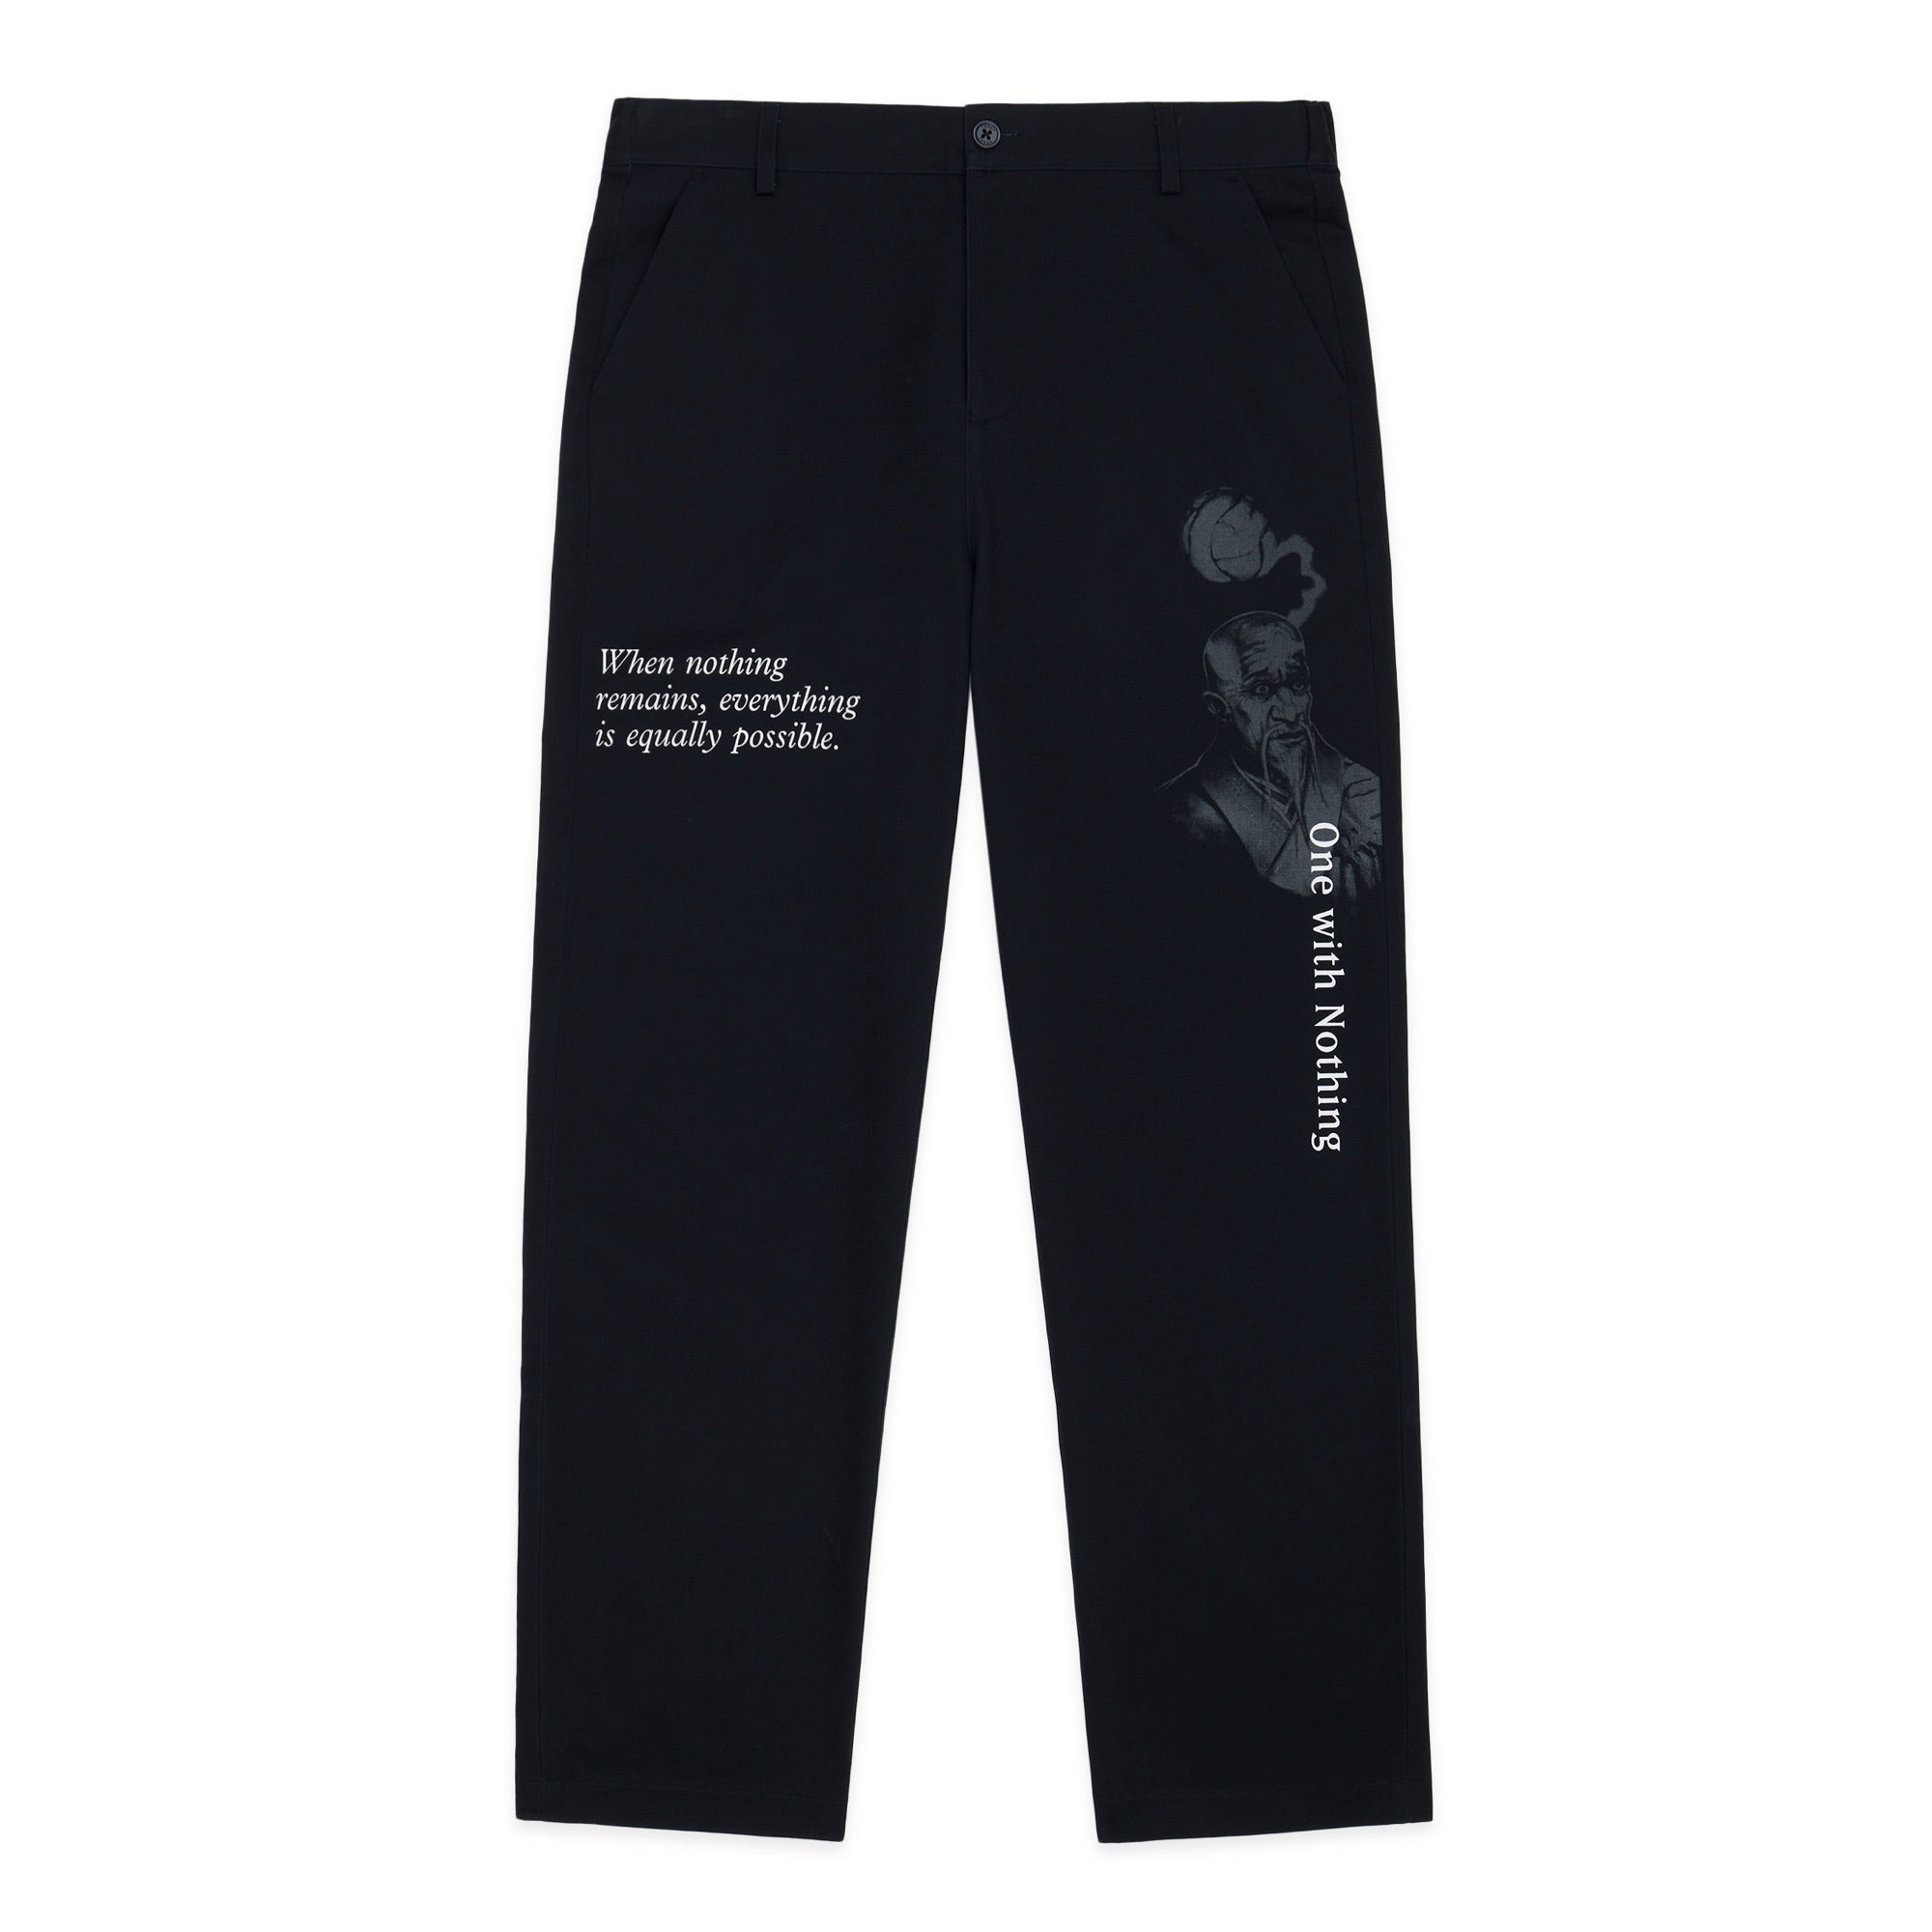 Women's Vizio Collection Black Stretch Skinny Pants. Size:L | eBay